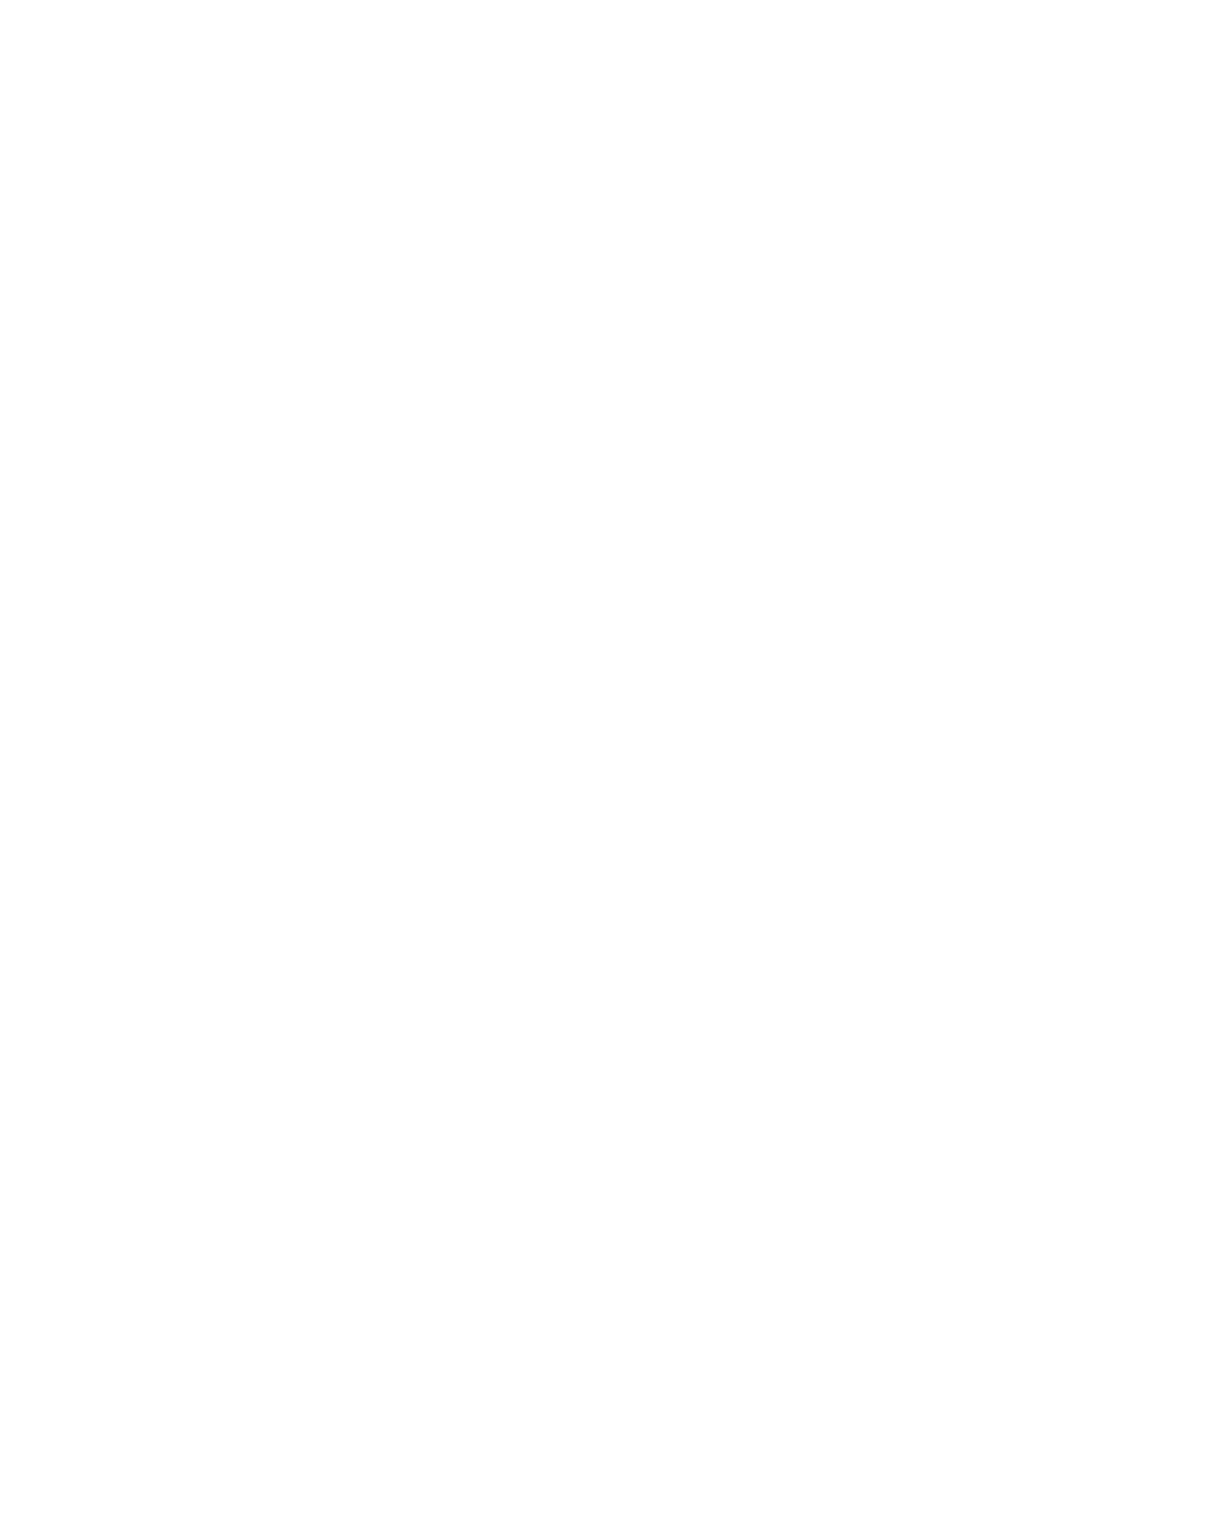 Tesco logo pour fonds sombres (PNG transparent)